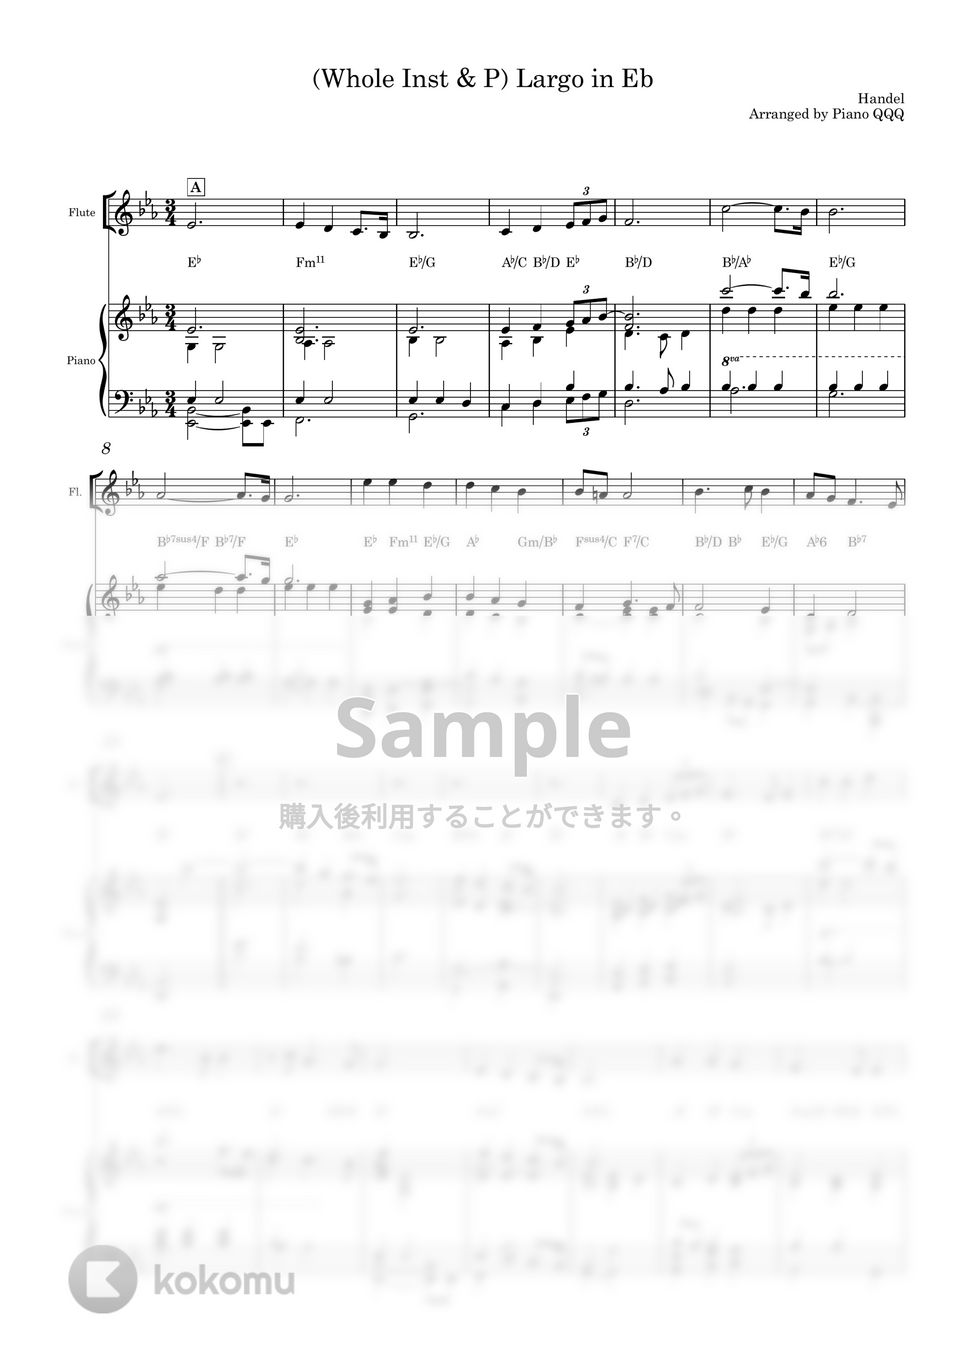 Handel - Largo (ピアノとのデュエット楽譜) by Piano QQQ